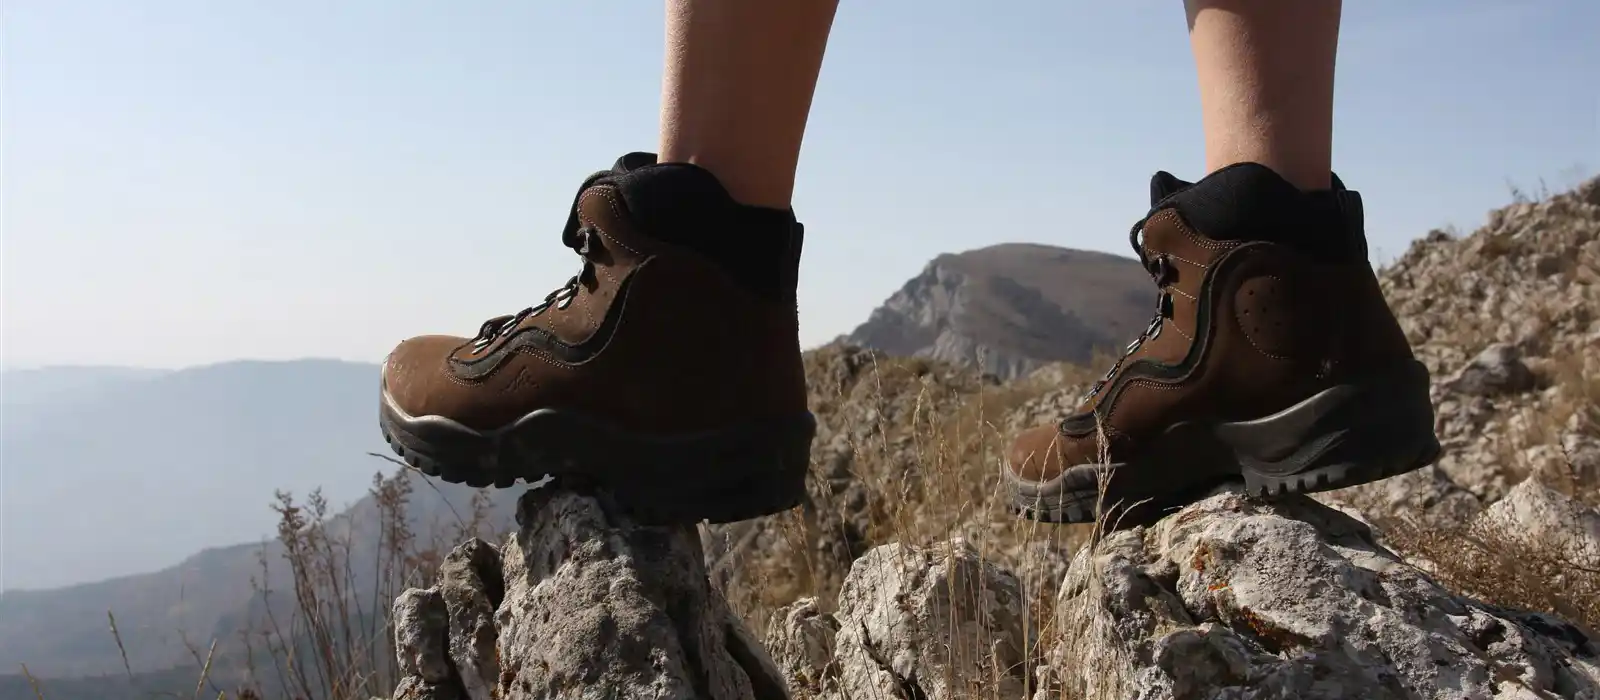 Hiker's boots